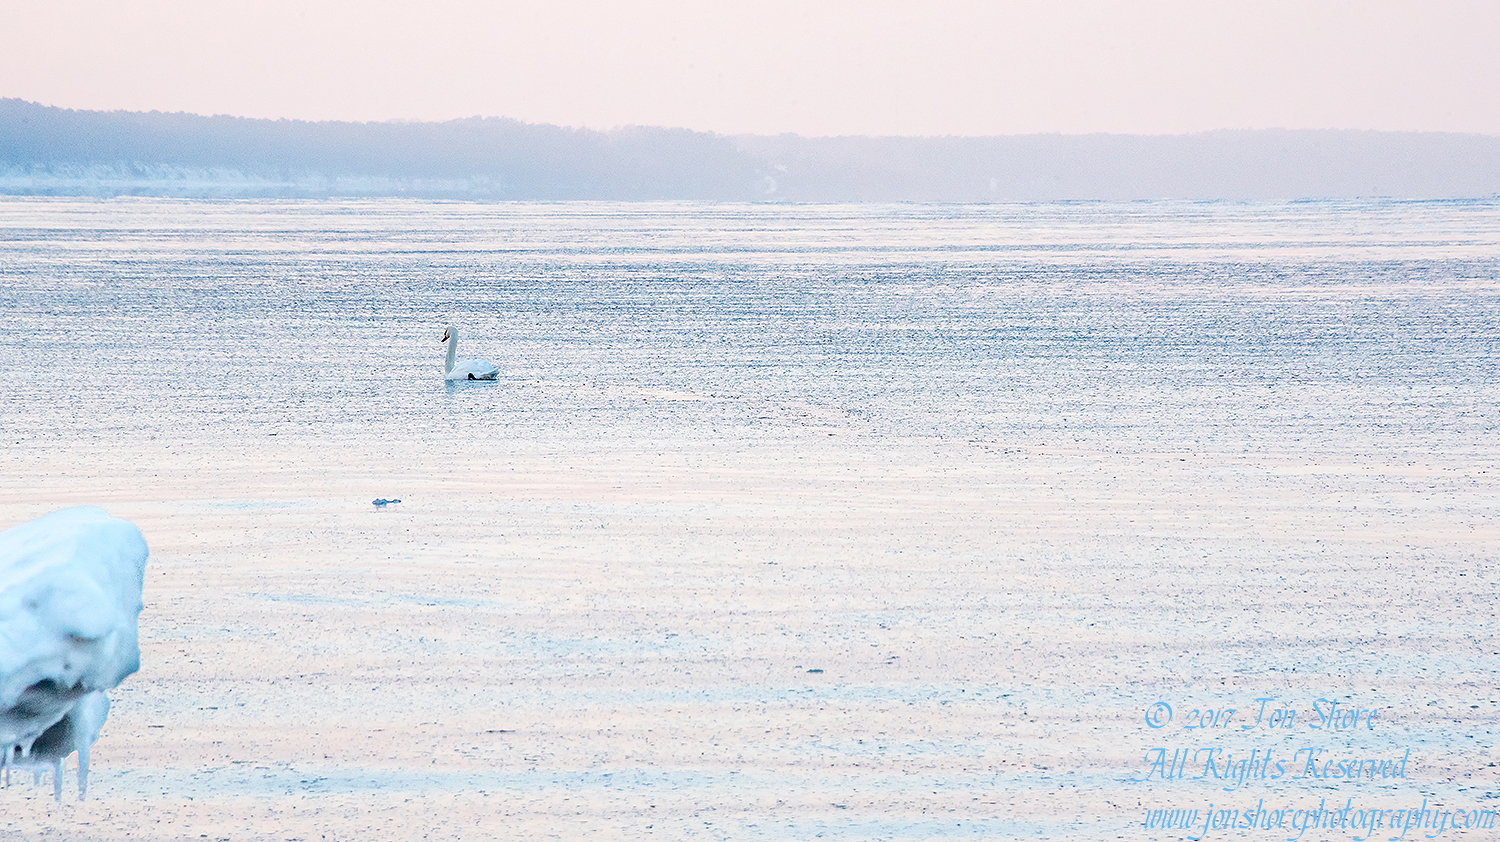 Swan swimming across the almost frozen sea. Nikkor 300mm